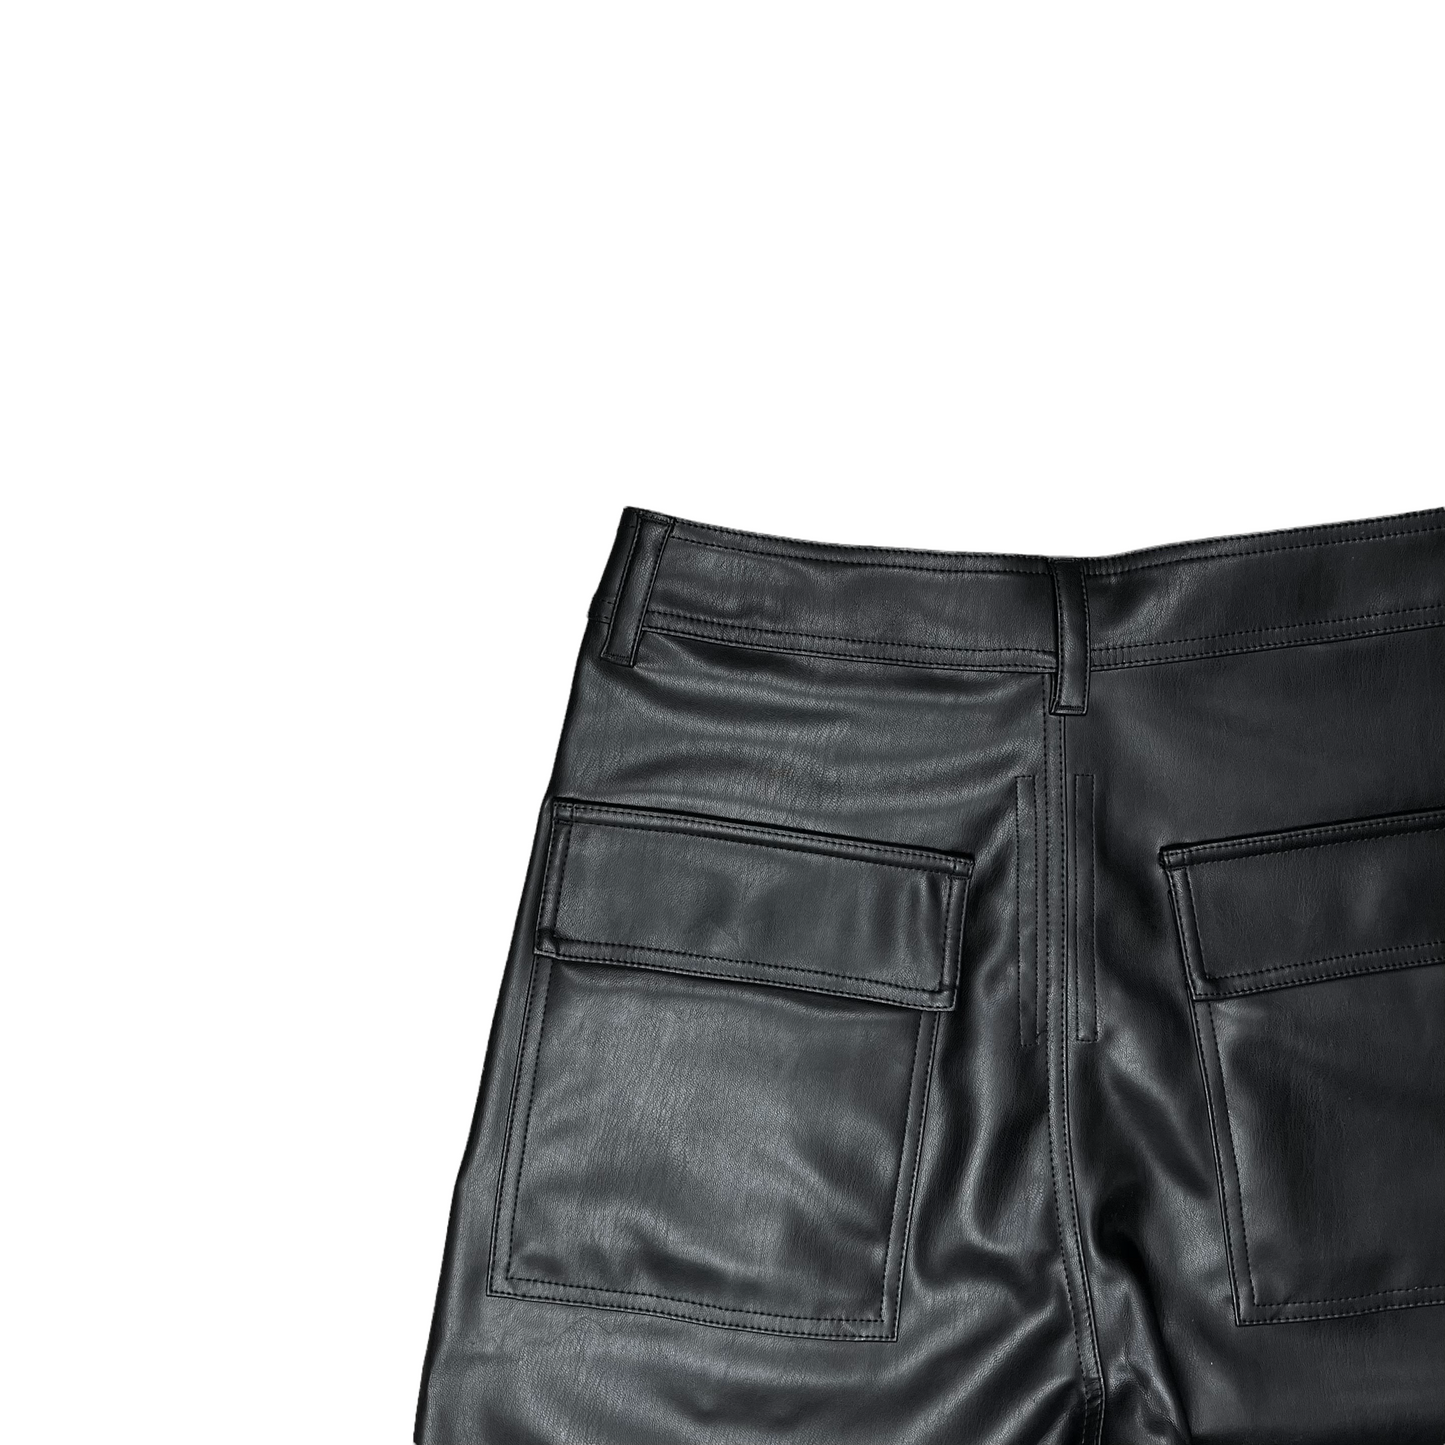 Rick Owens DRKSHDW Jet Vegan Leather Shorts - AW20